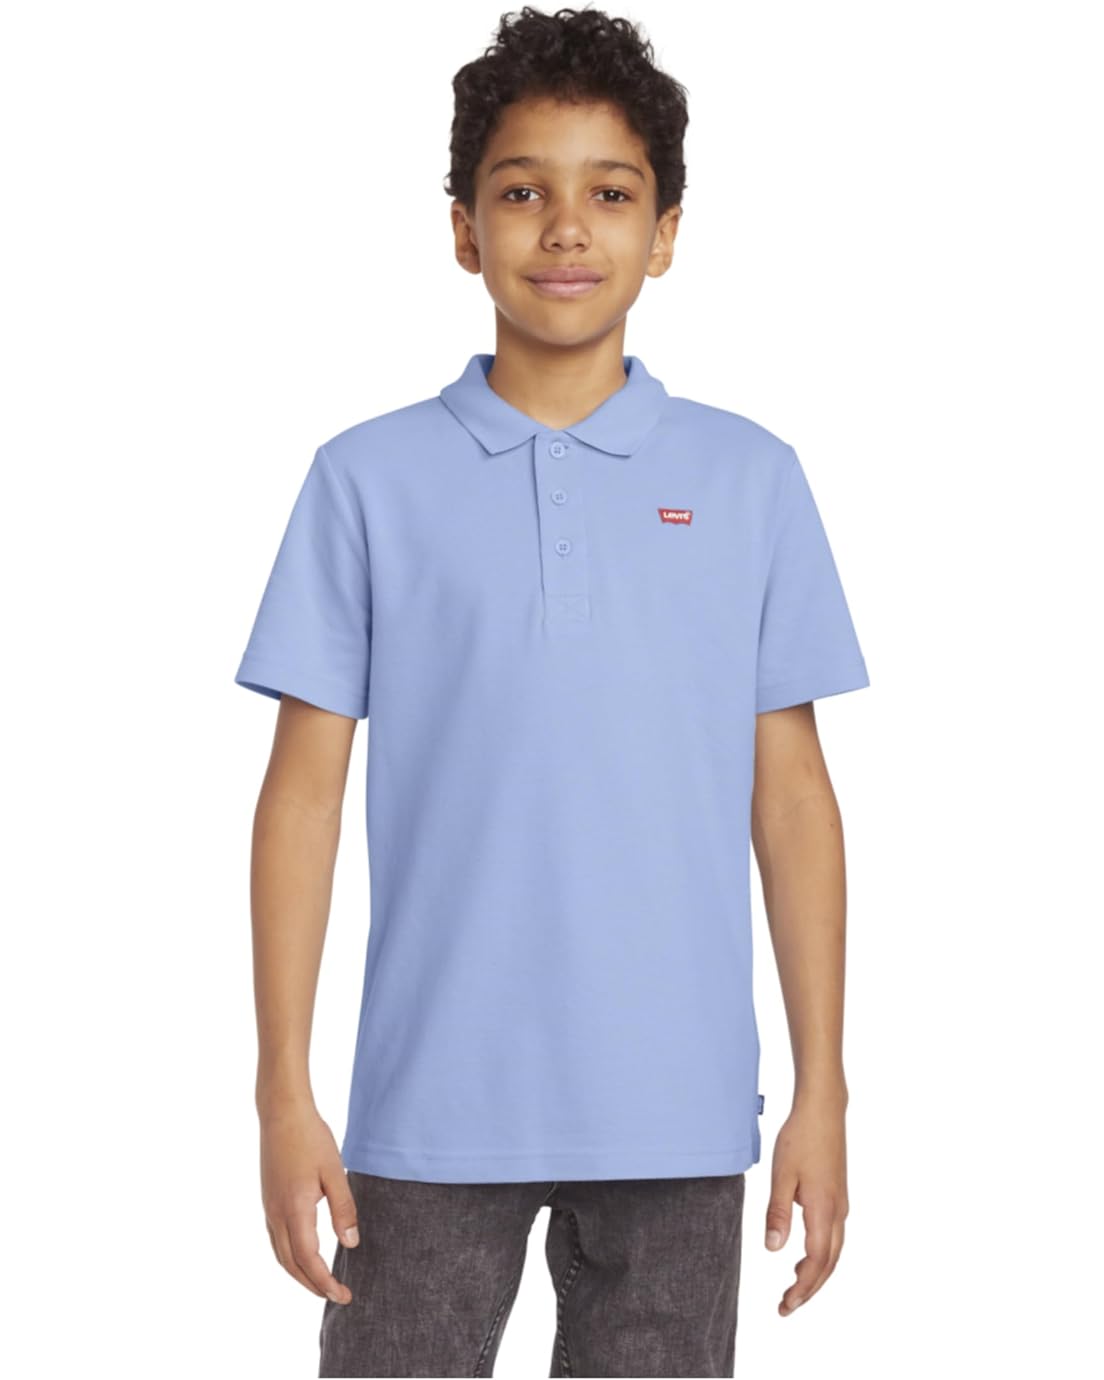 Levis Kids Short Sleeve Polo Shirt (Big Kids)